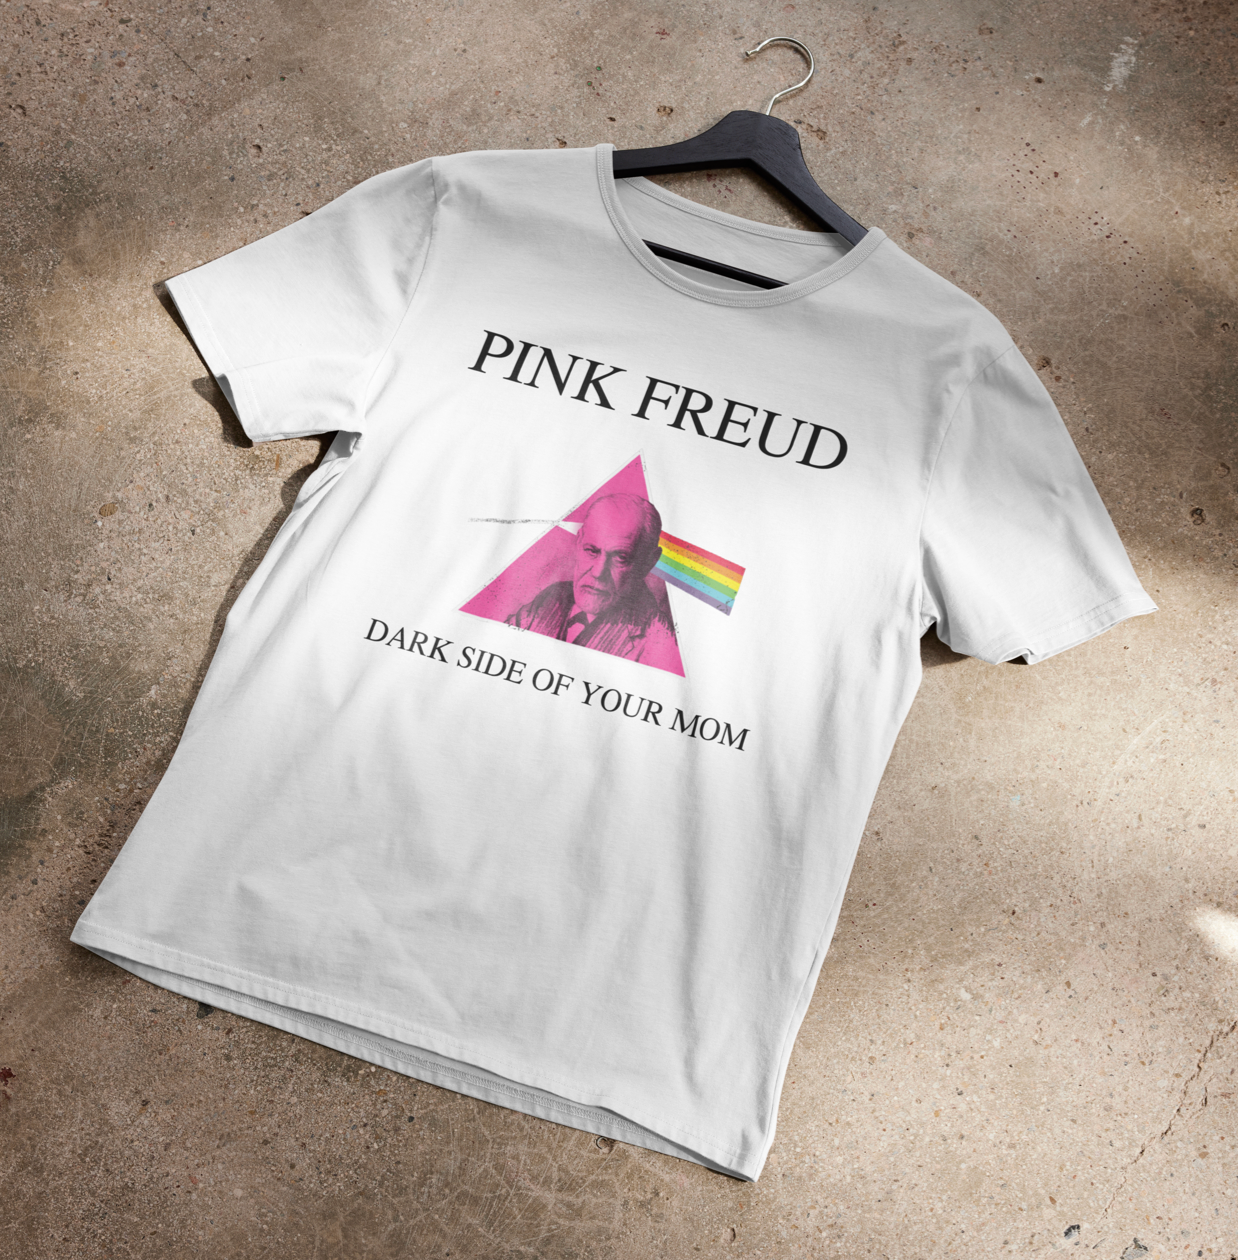 Pink Freud - Unisex Heavy Cotton Tee